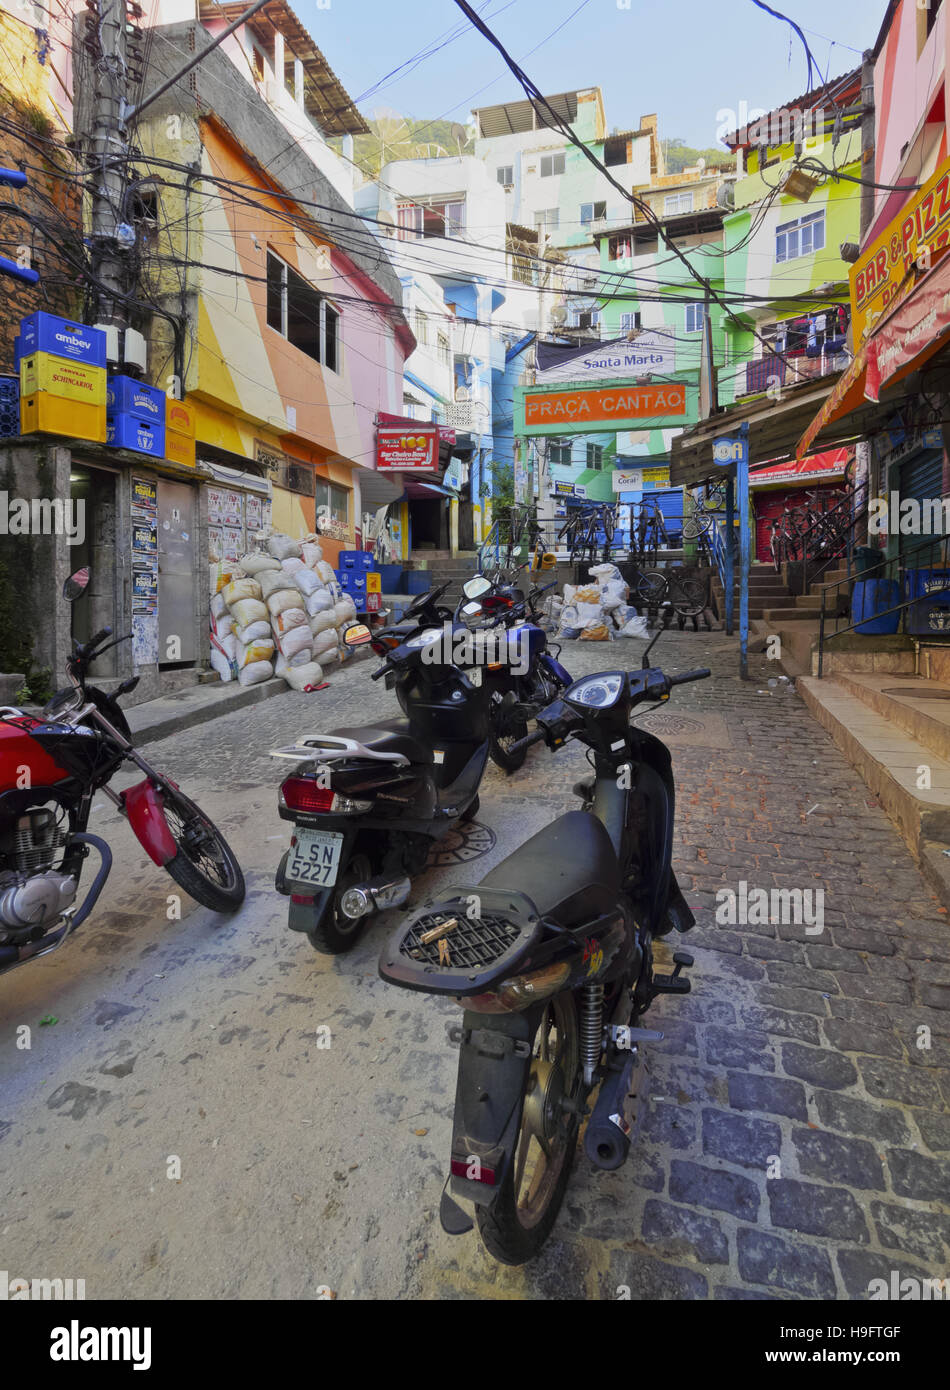 Brazil, City of Rio de Janeiro, View of the Favela Santa Marta. Stock Photo